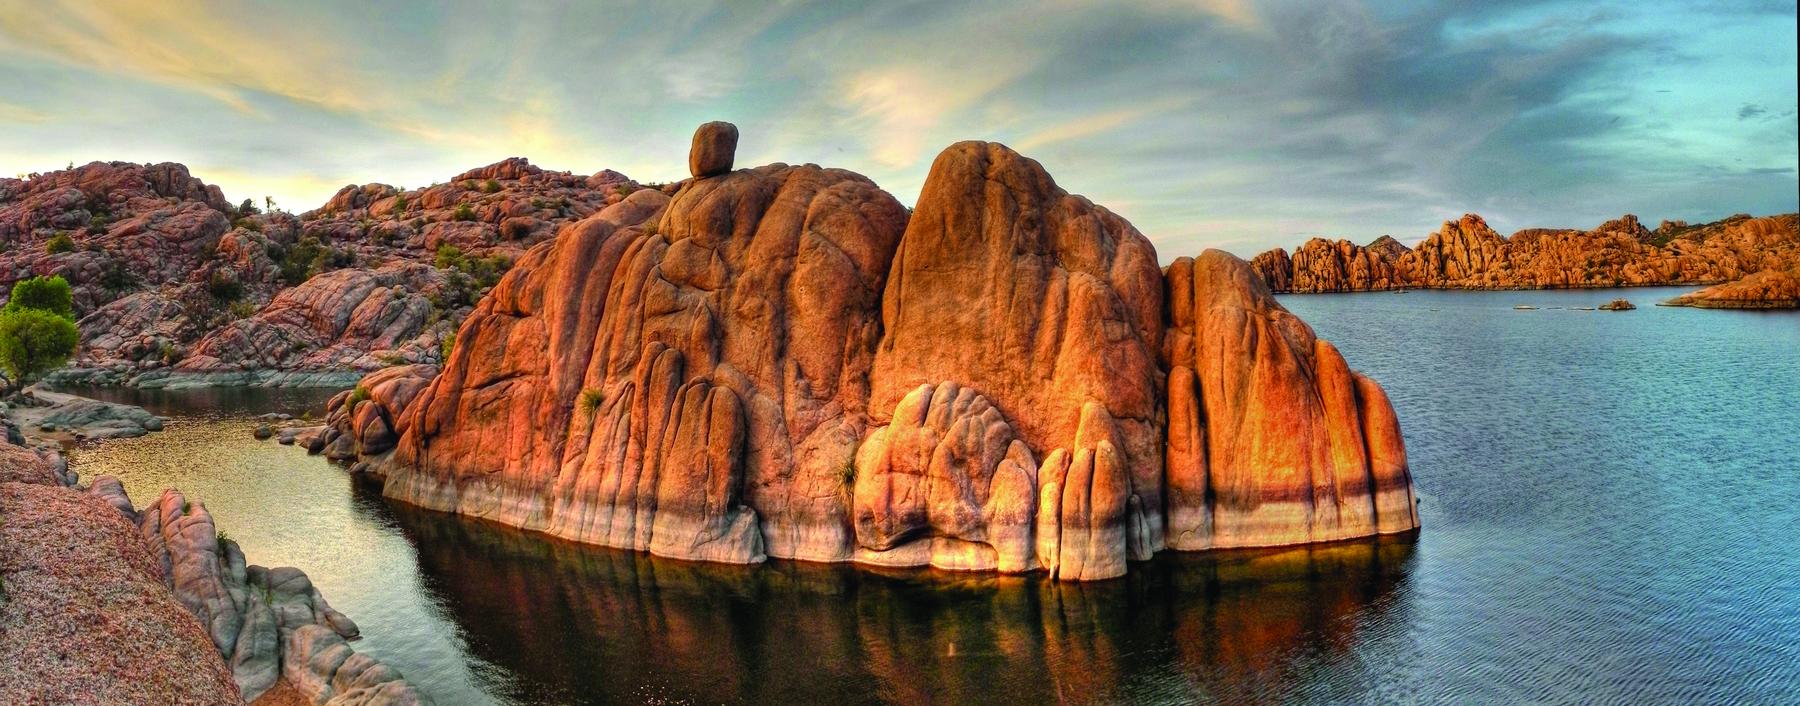 Am Watson Lake in Prescott kann man stundenlang im Kajak durch die Felsformationen paddeln.